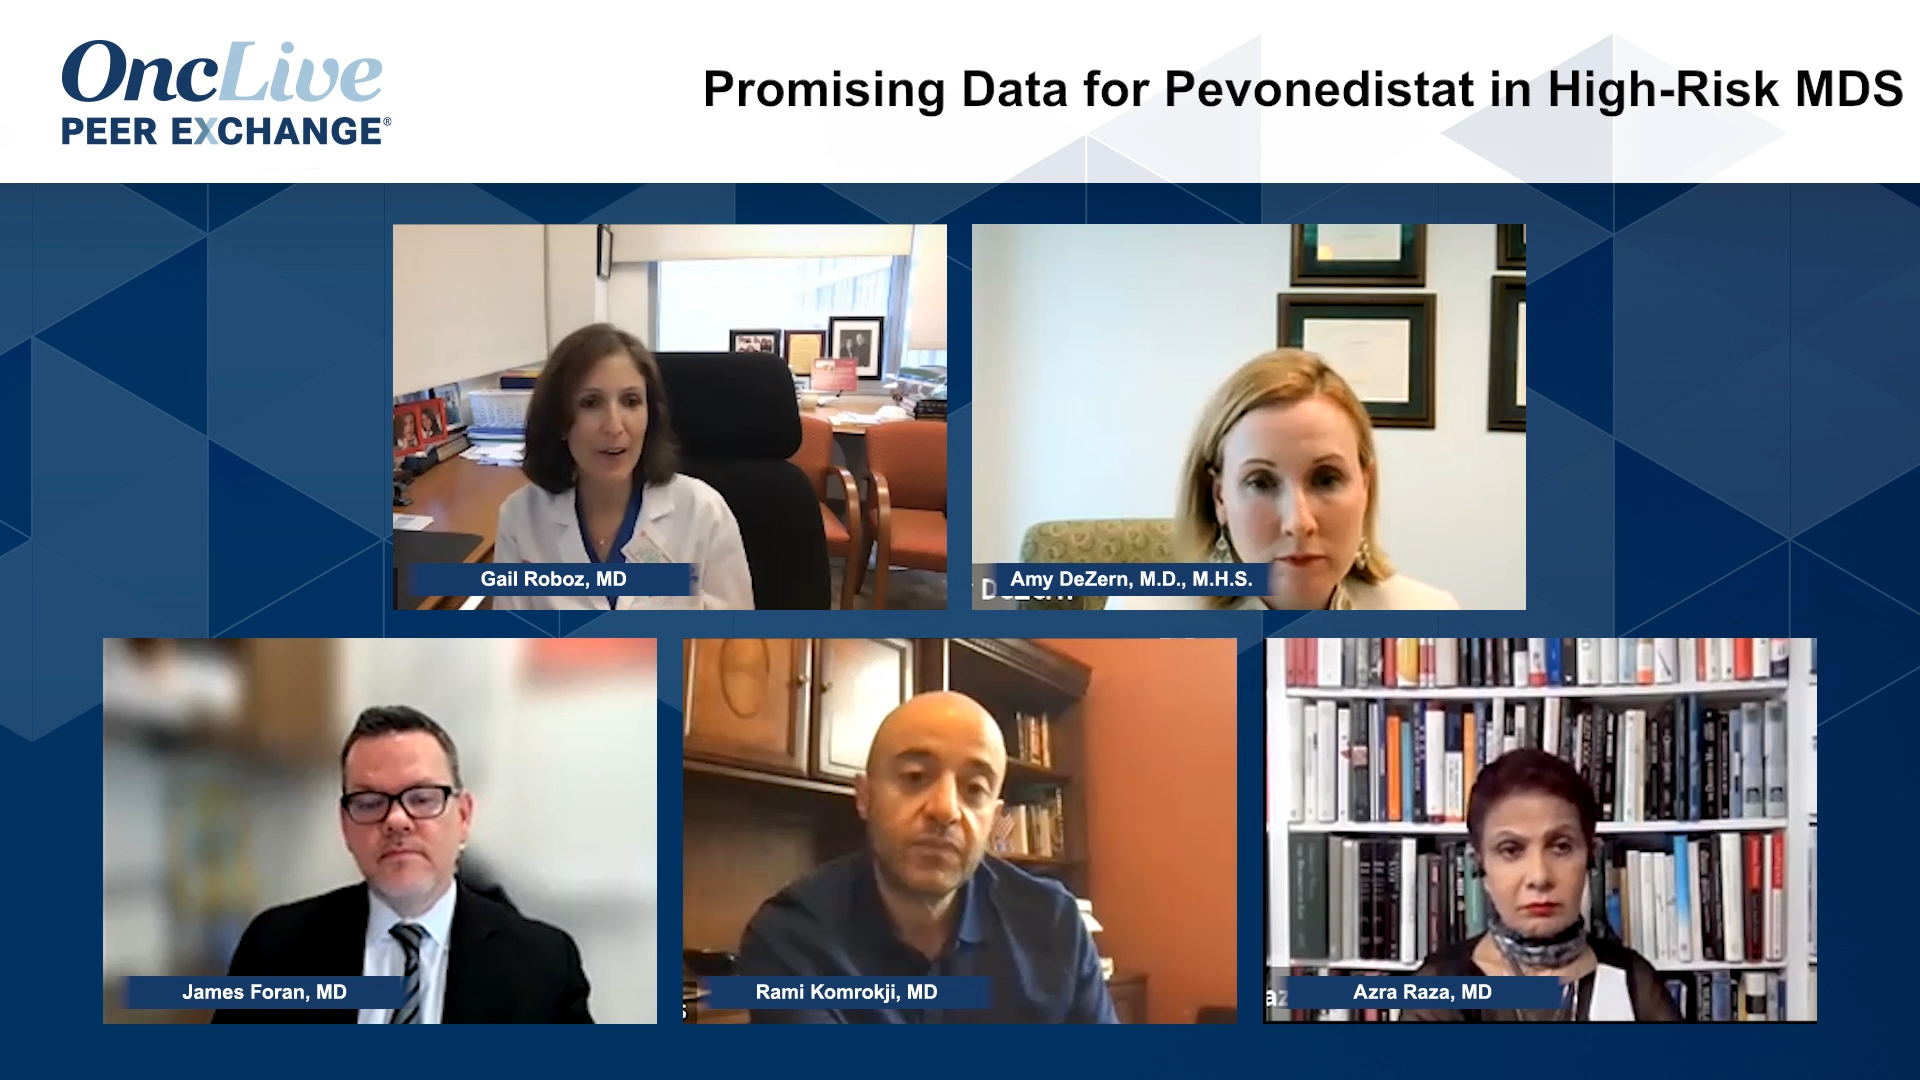 Promising Data for Pevonedistat in High-Risk MDS